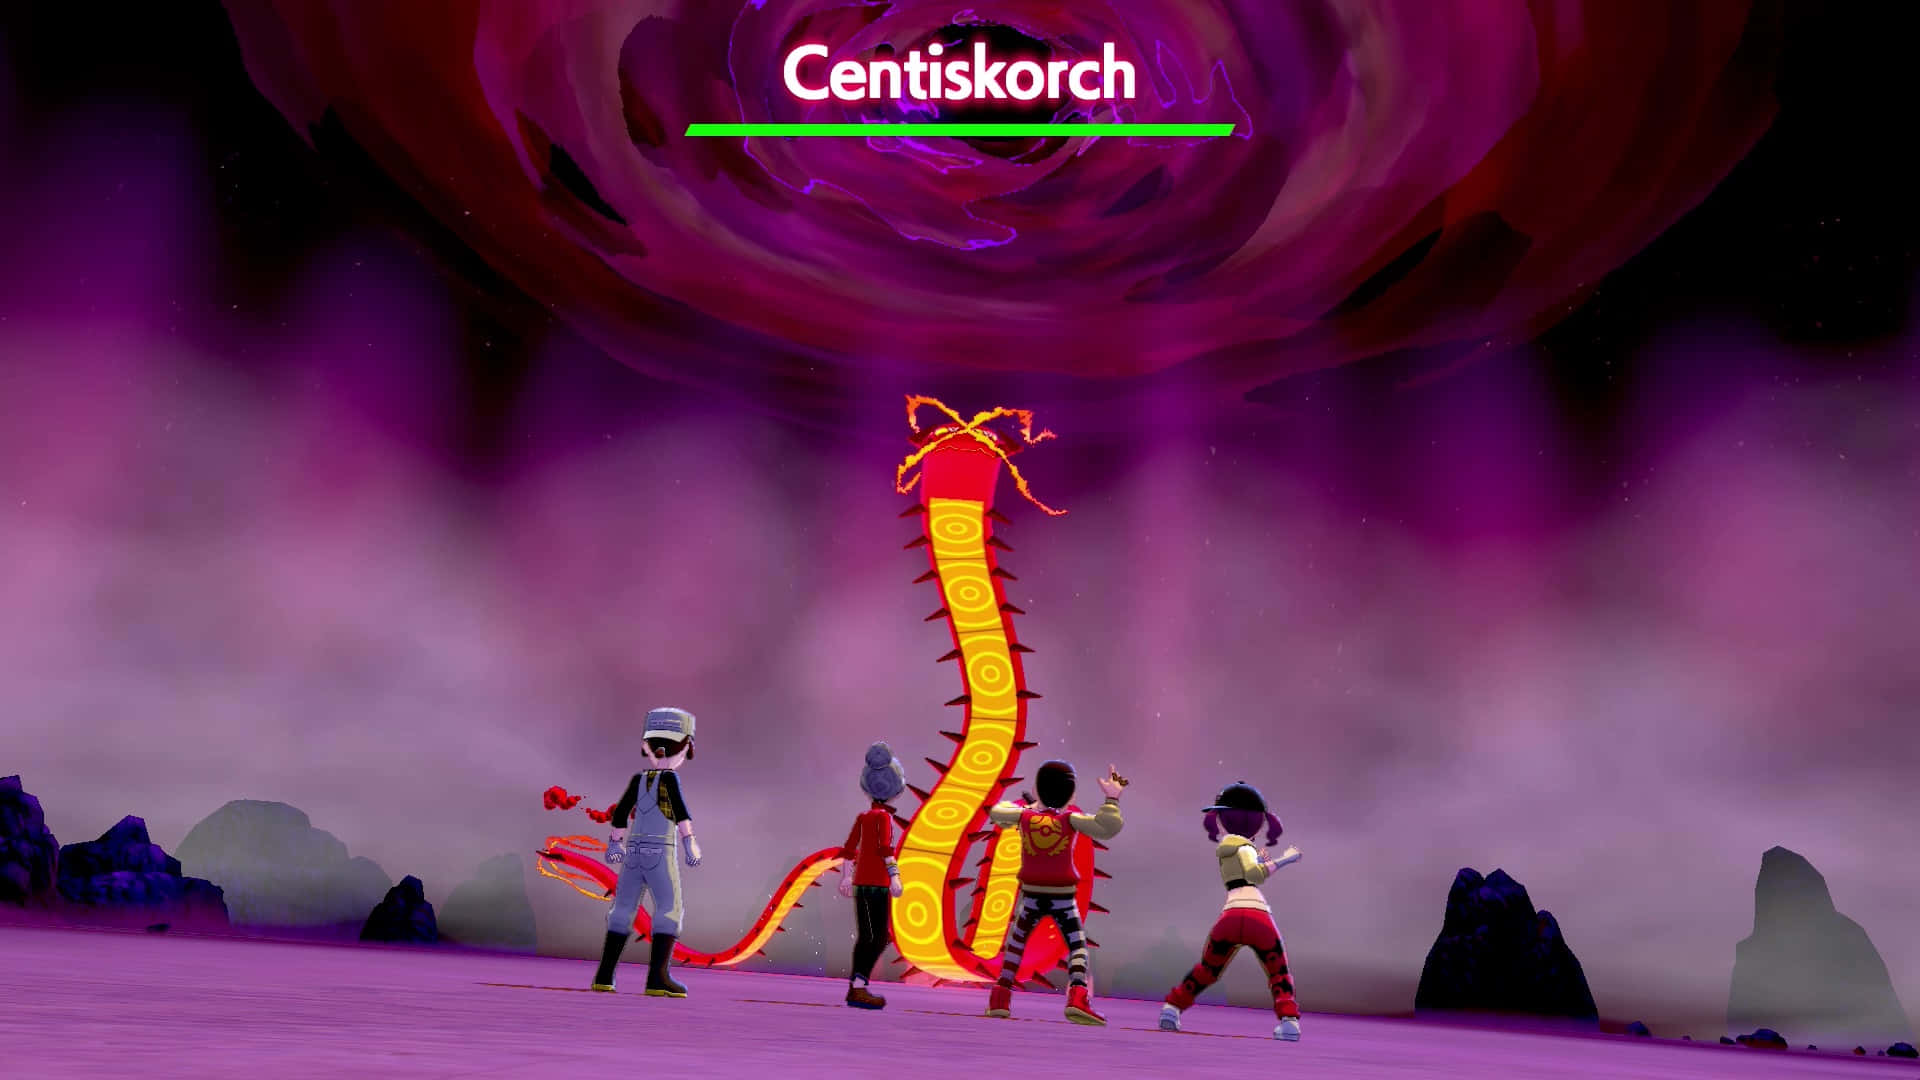 Fiery Encounter: Trainers with Centiskorch in a Pokémon Battle Wallpaper